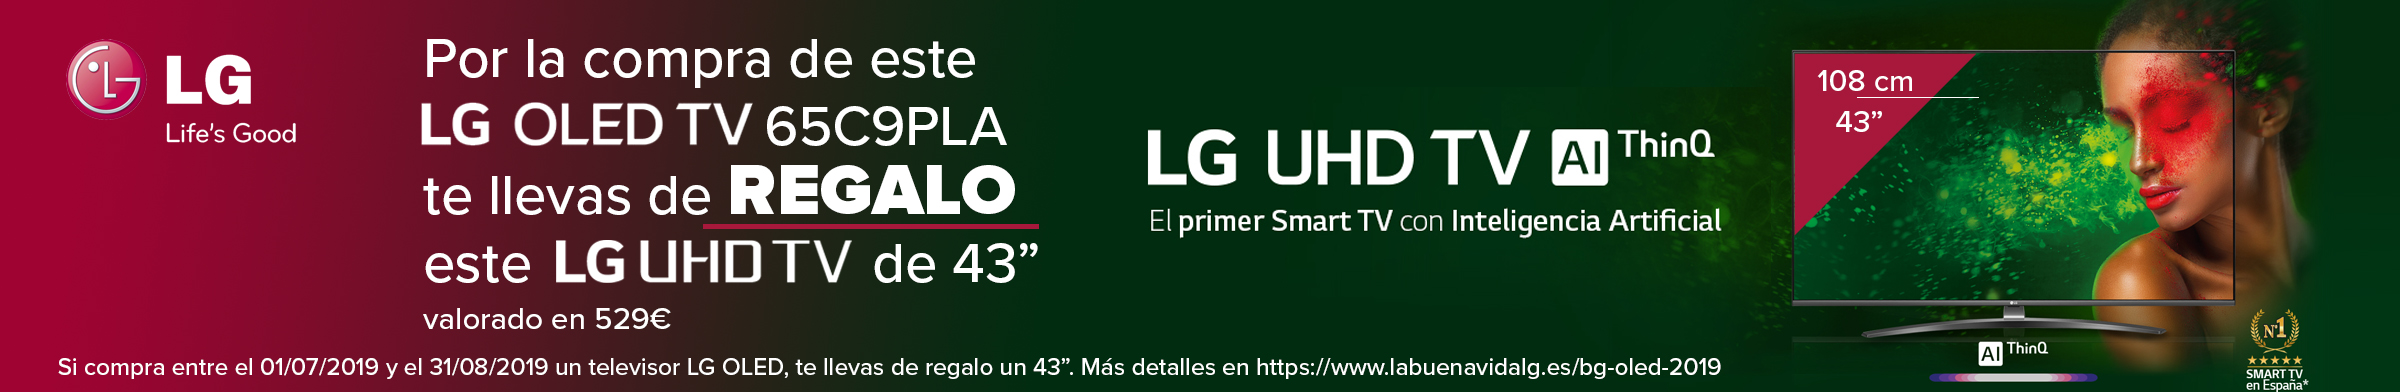 LG OLED TV + TV UHD de REGALO